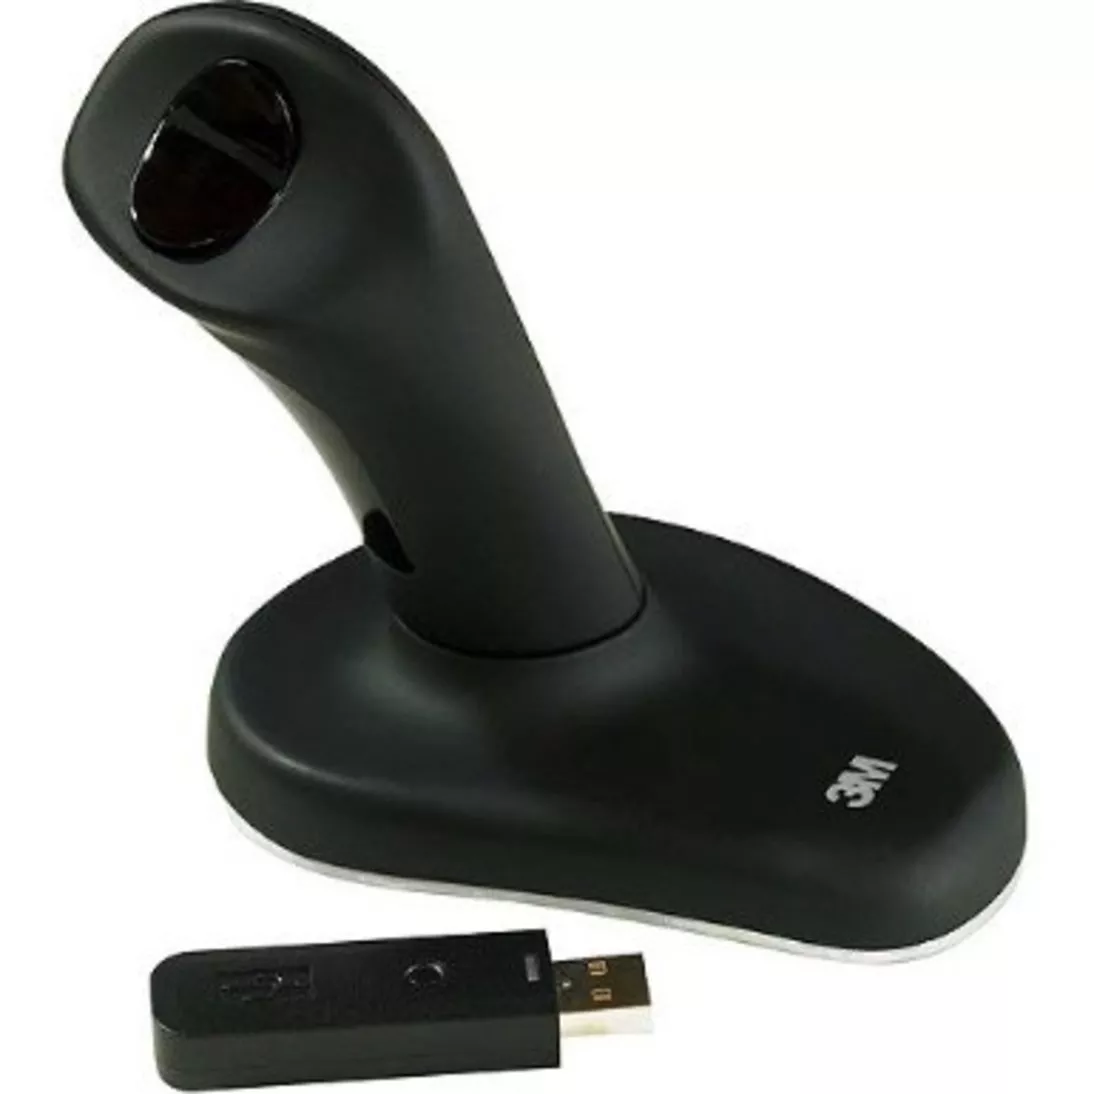 3M™ Wireless Ergonomic Mouse EM550GPL, Large